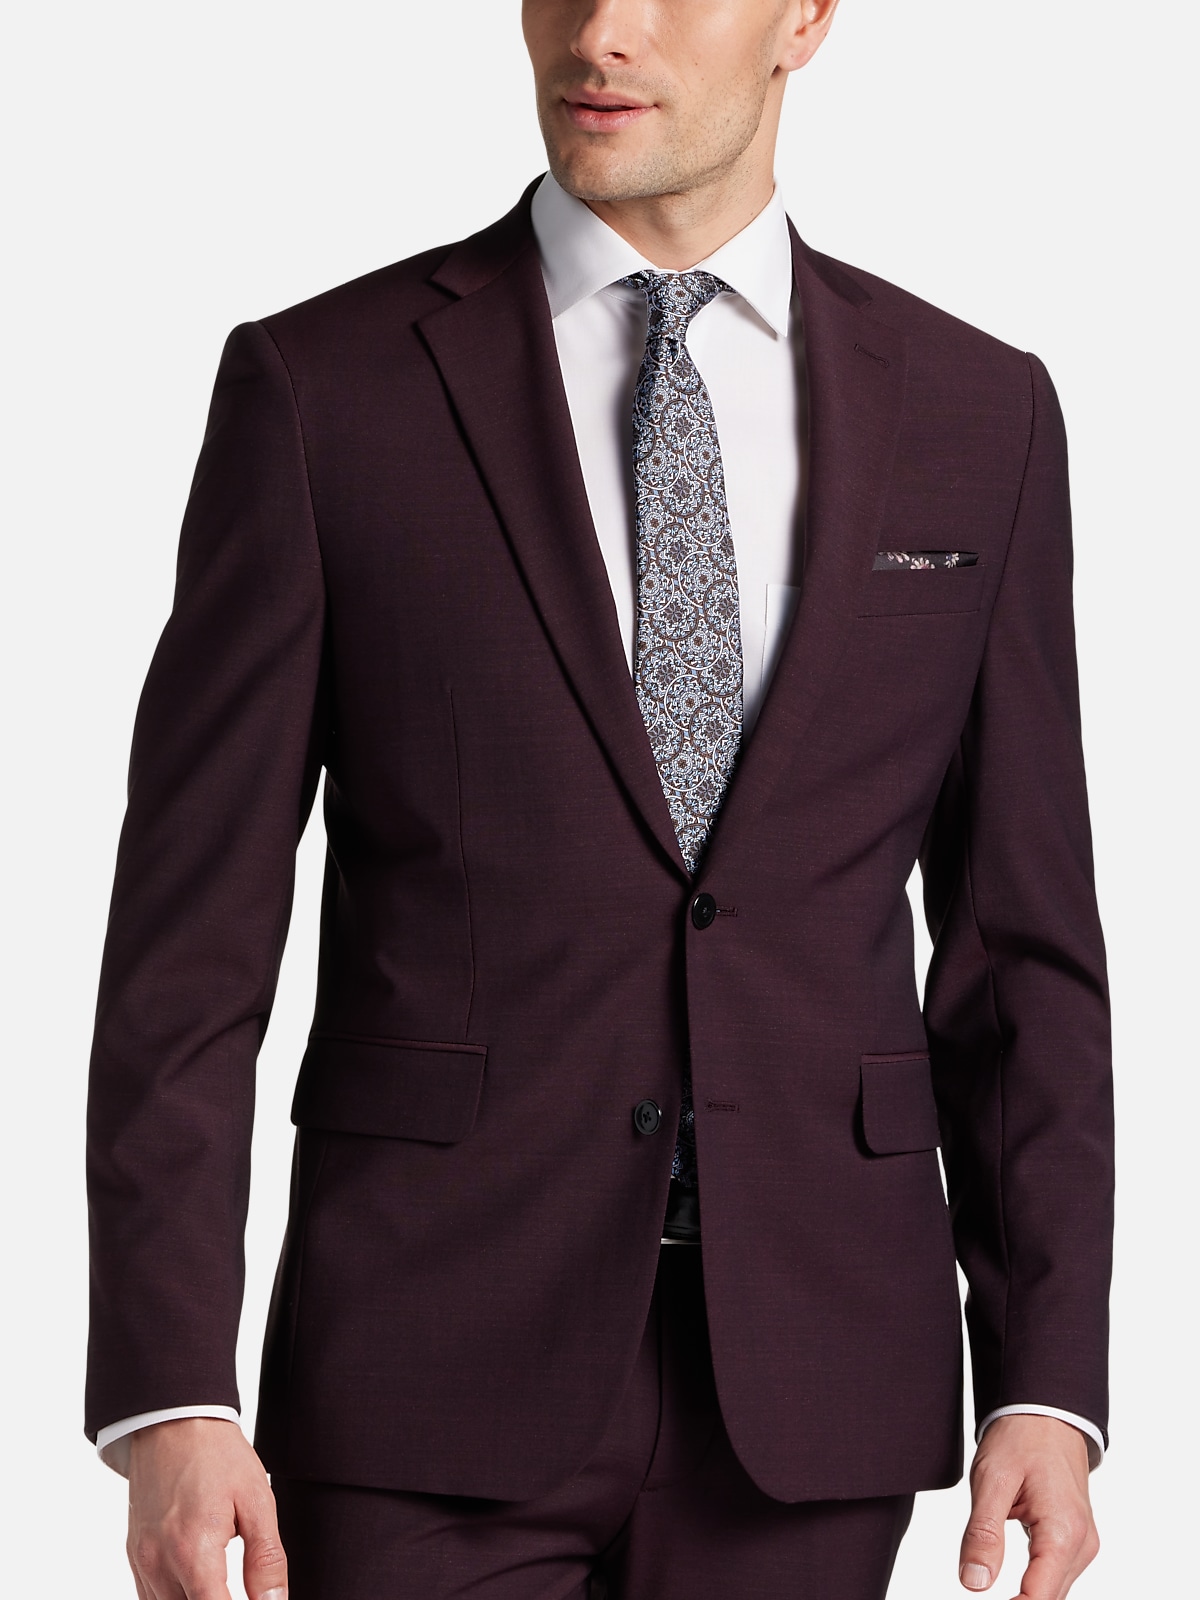 JOE Joseph Abboud Skinny Fit Suit Separates Jacket | All Clearance $39. ...